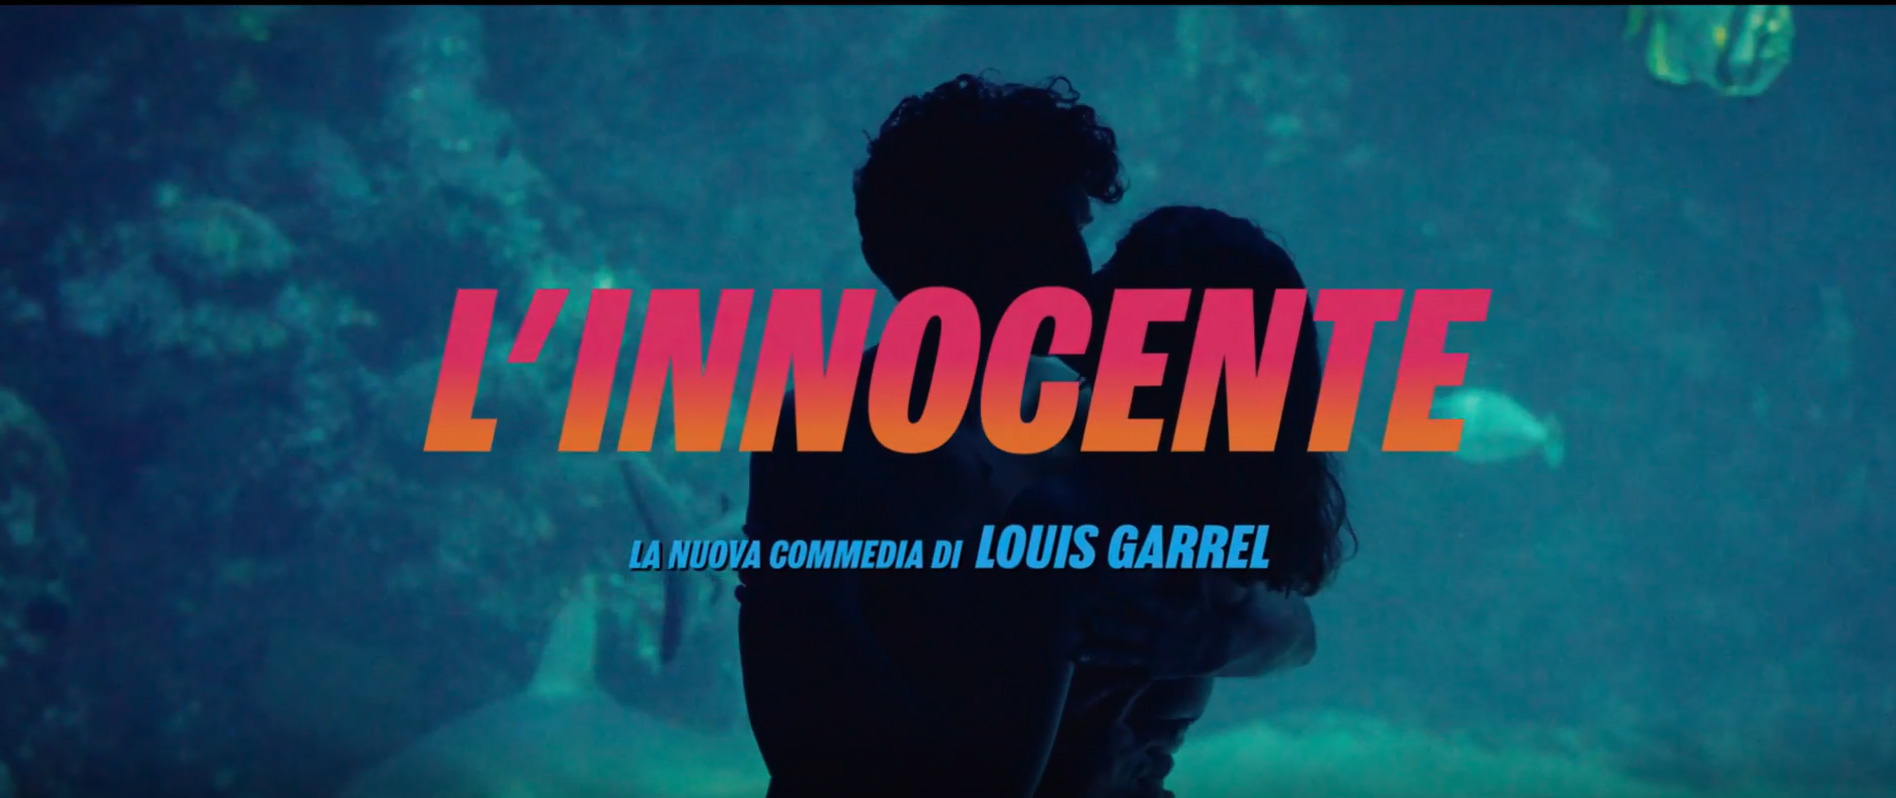 L'innocente, trailer film di Louis Garrel